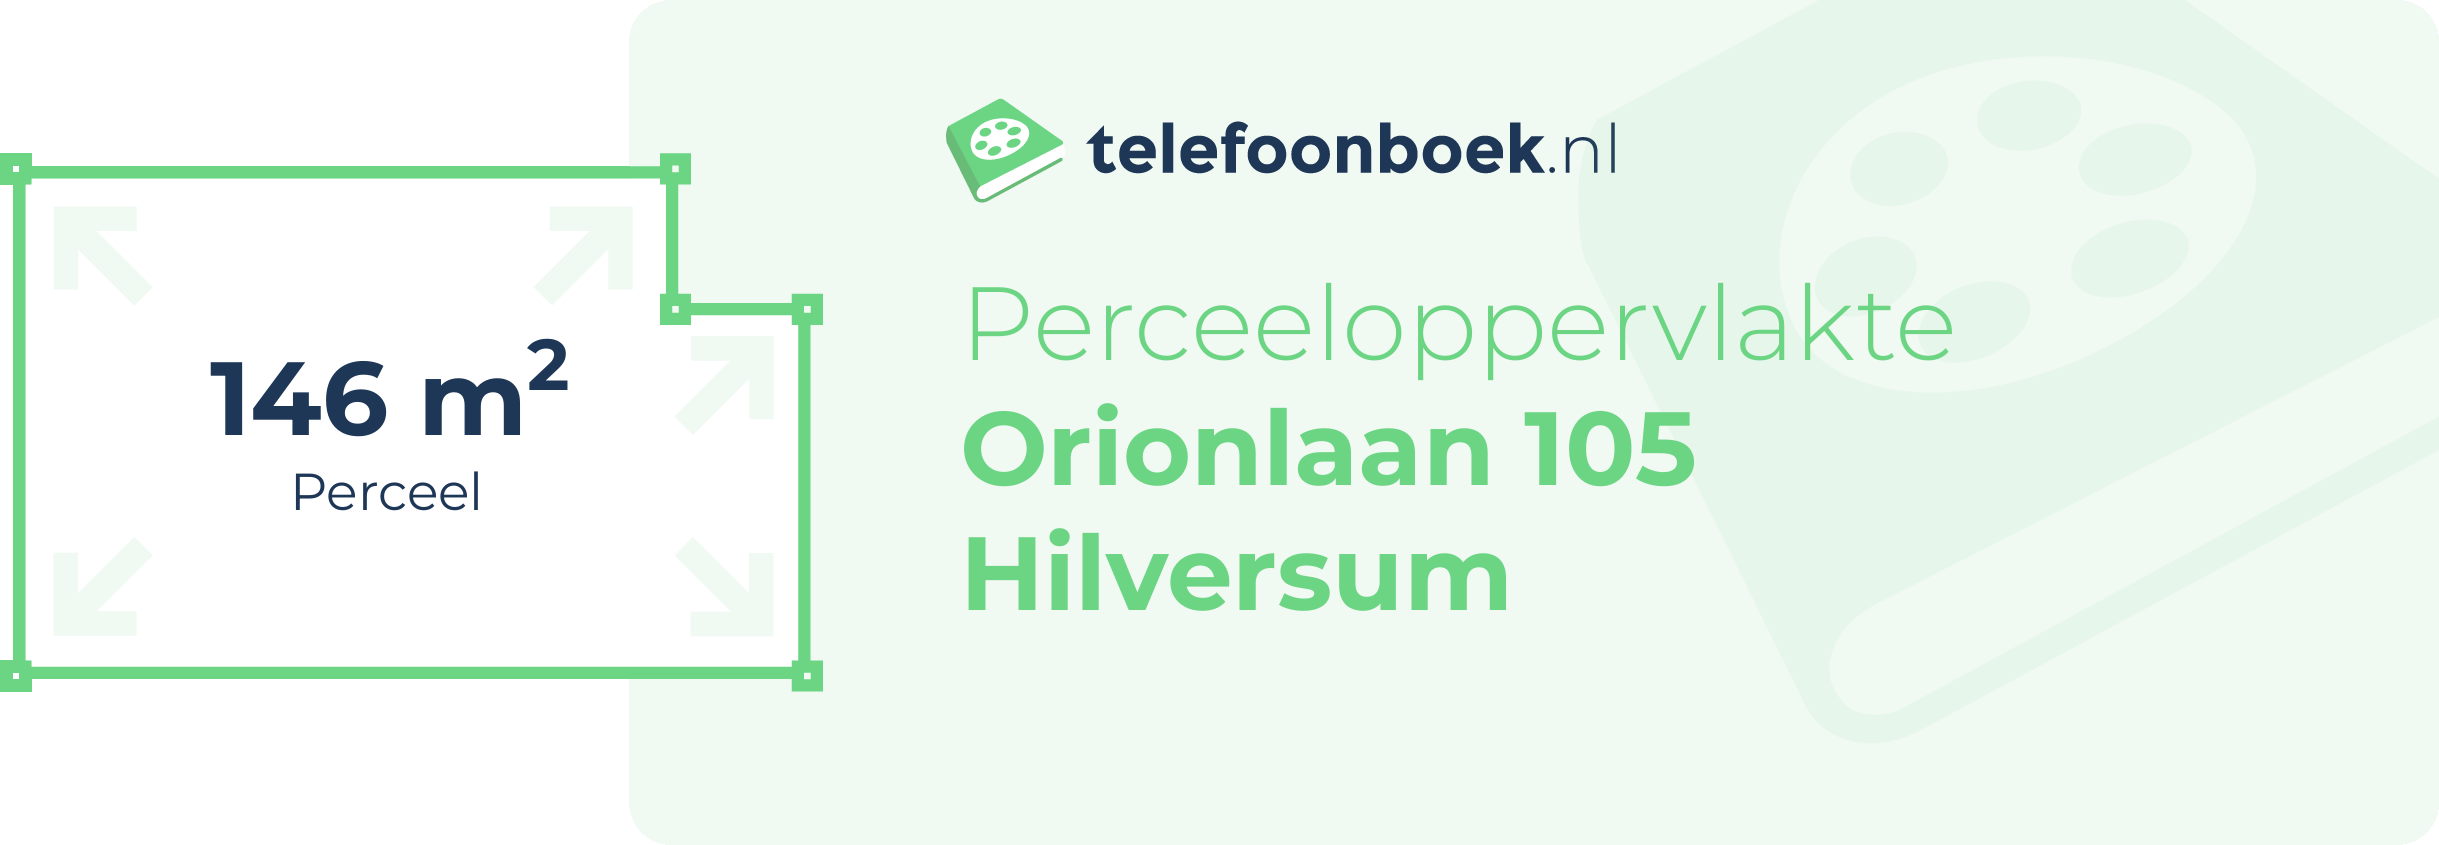 Perceeloppervlakte Orionlaan 105 Hilversum